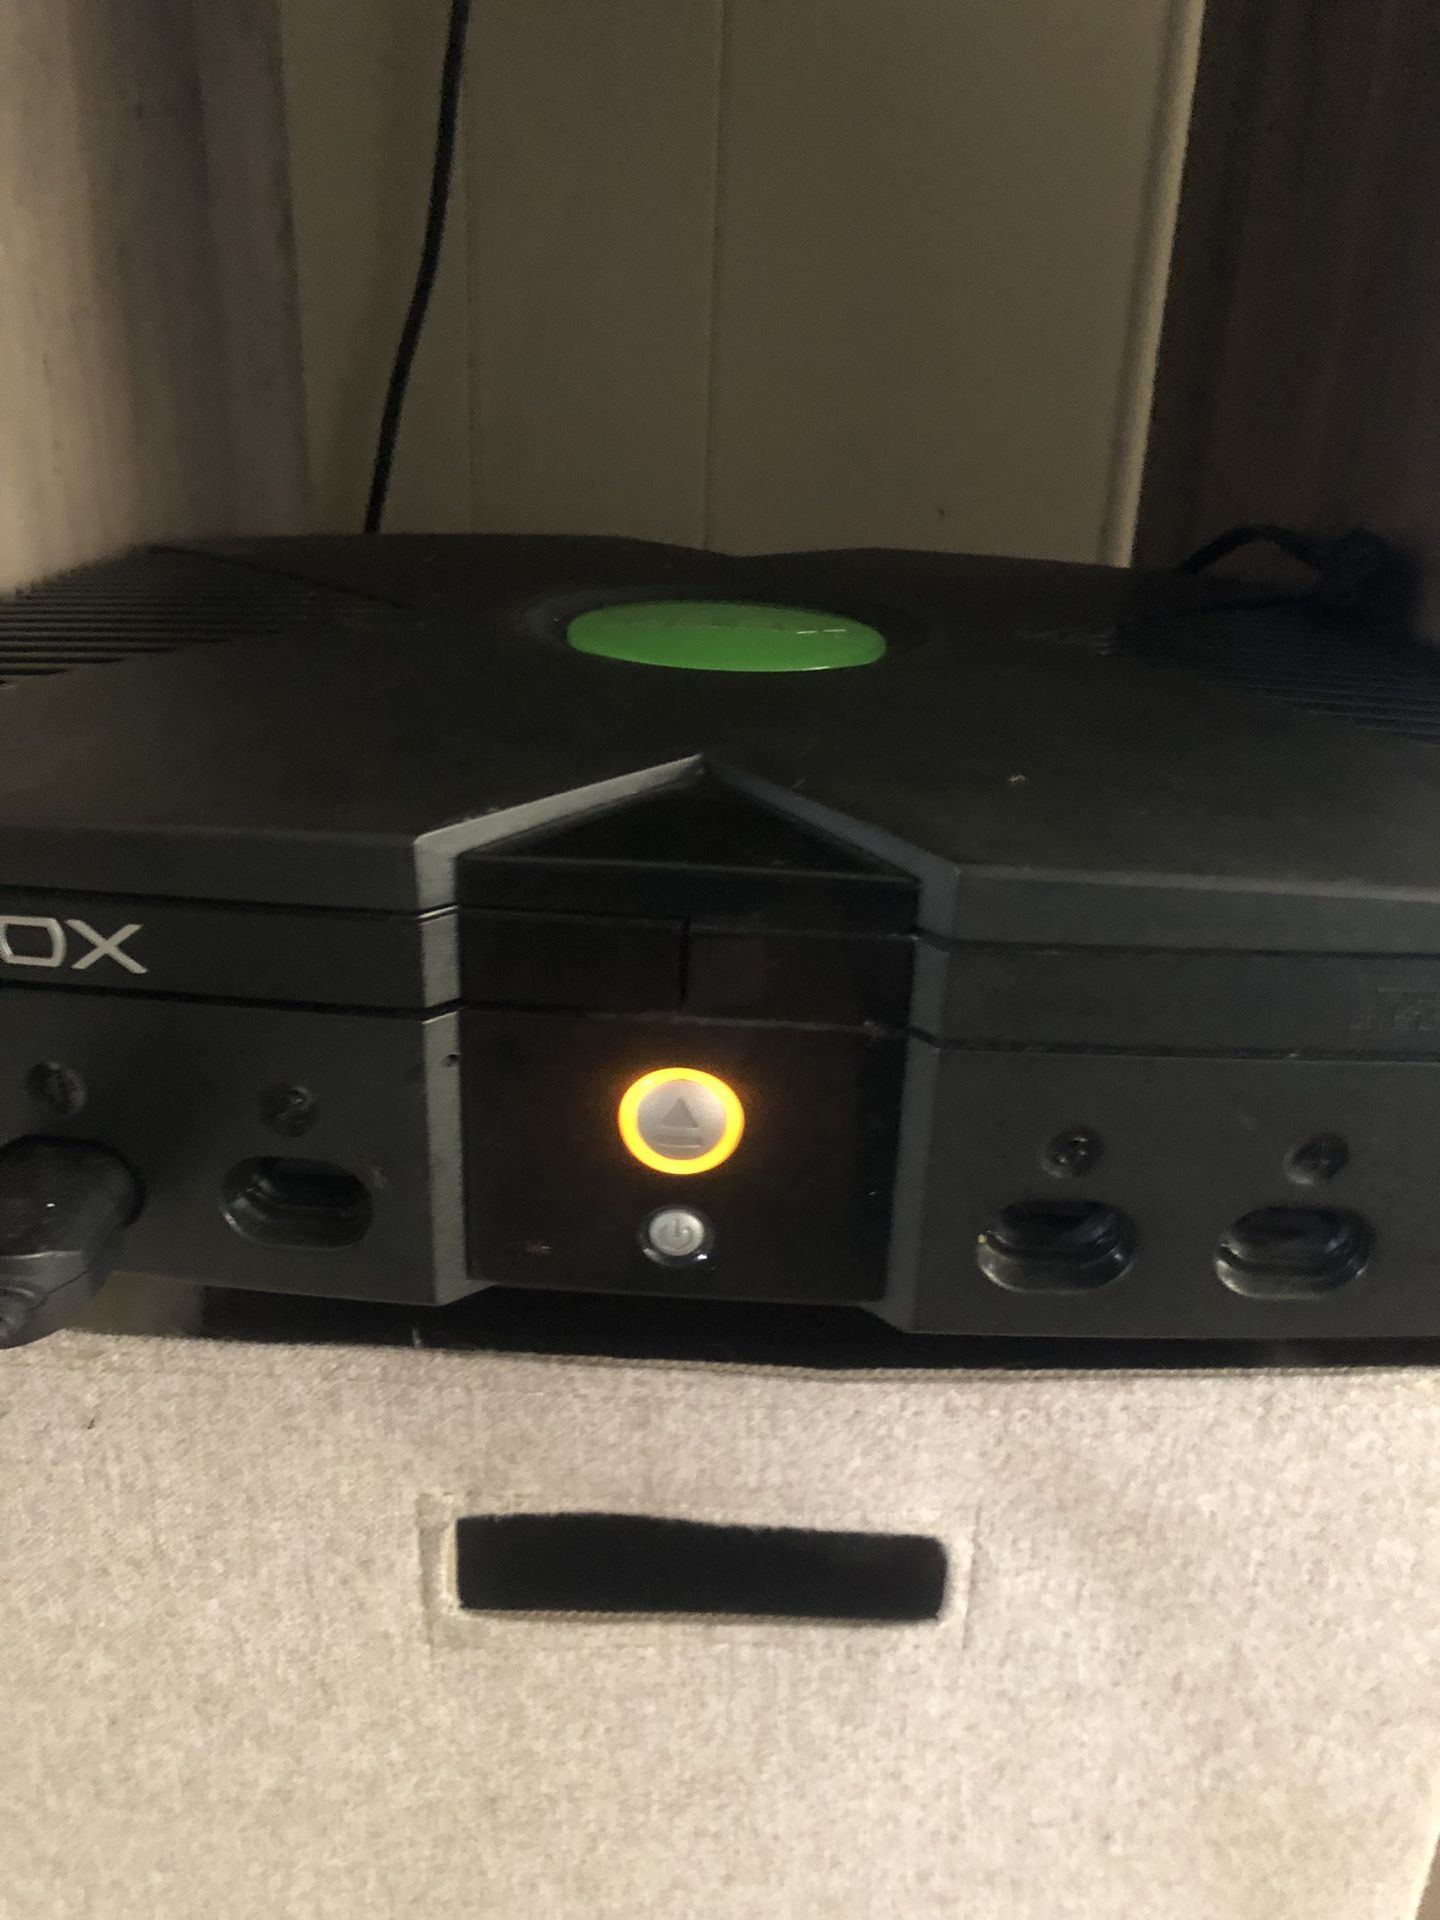 Modded Original Xbox